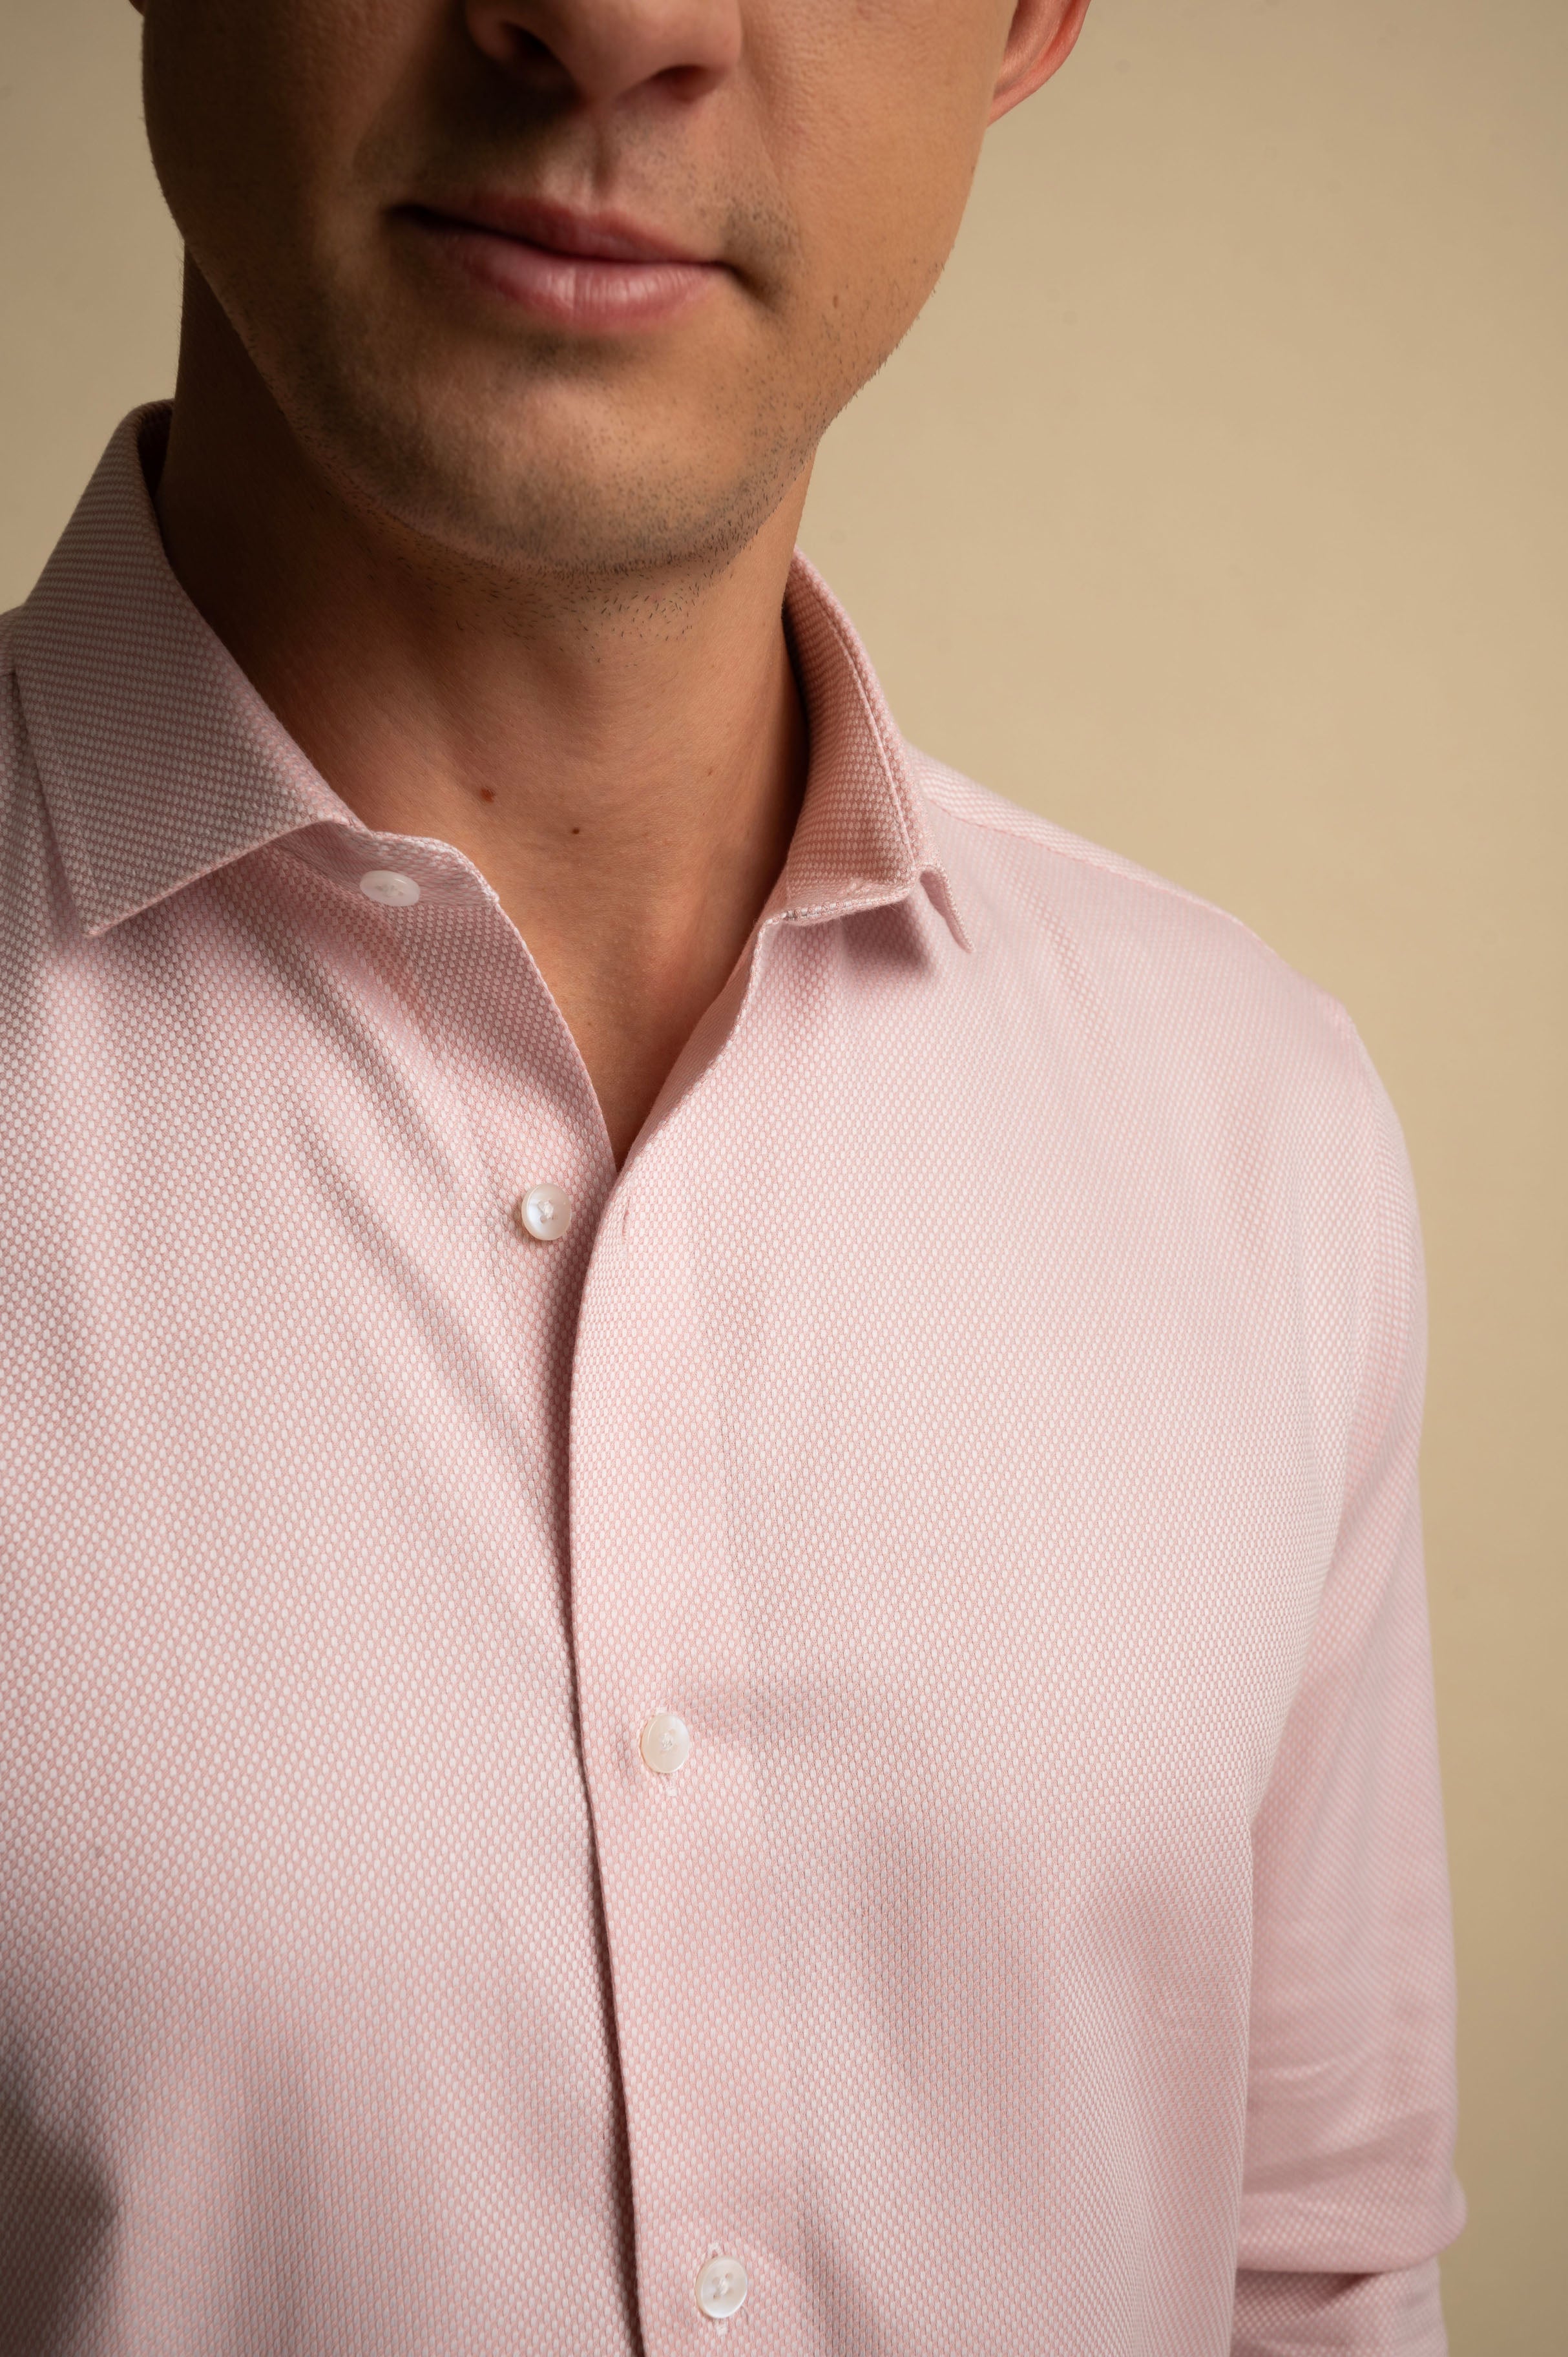 Sterling Pink Micro Dot Shirt